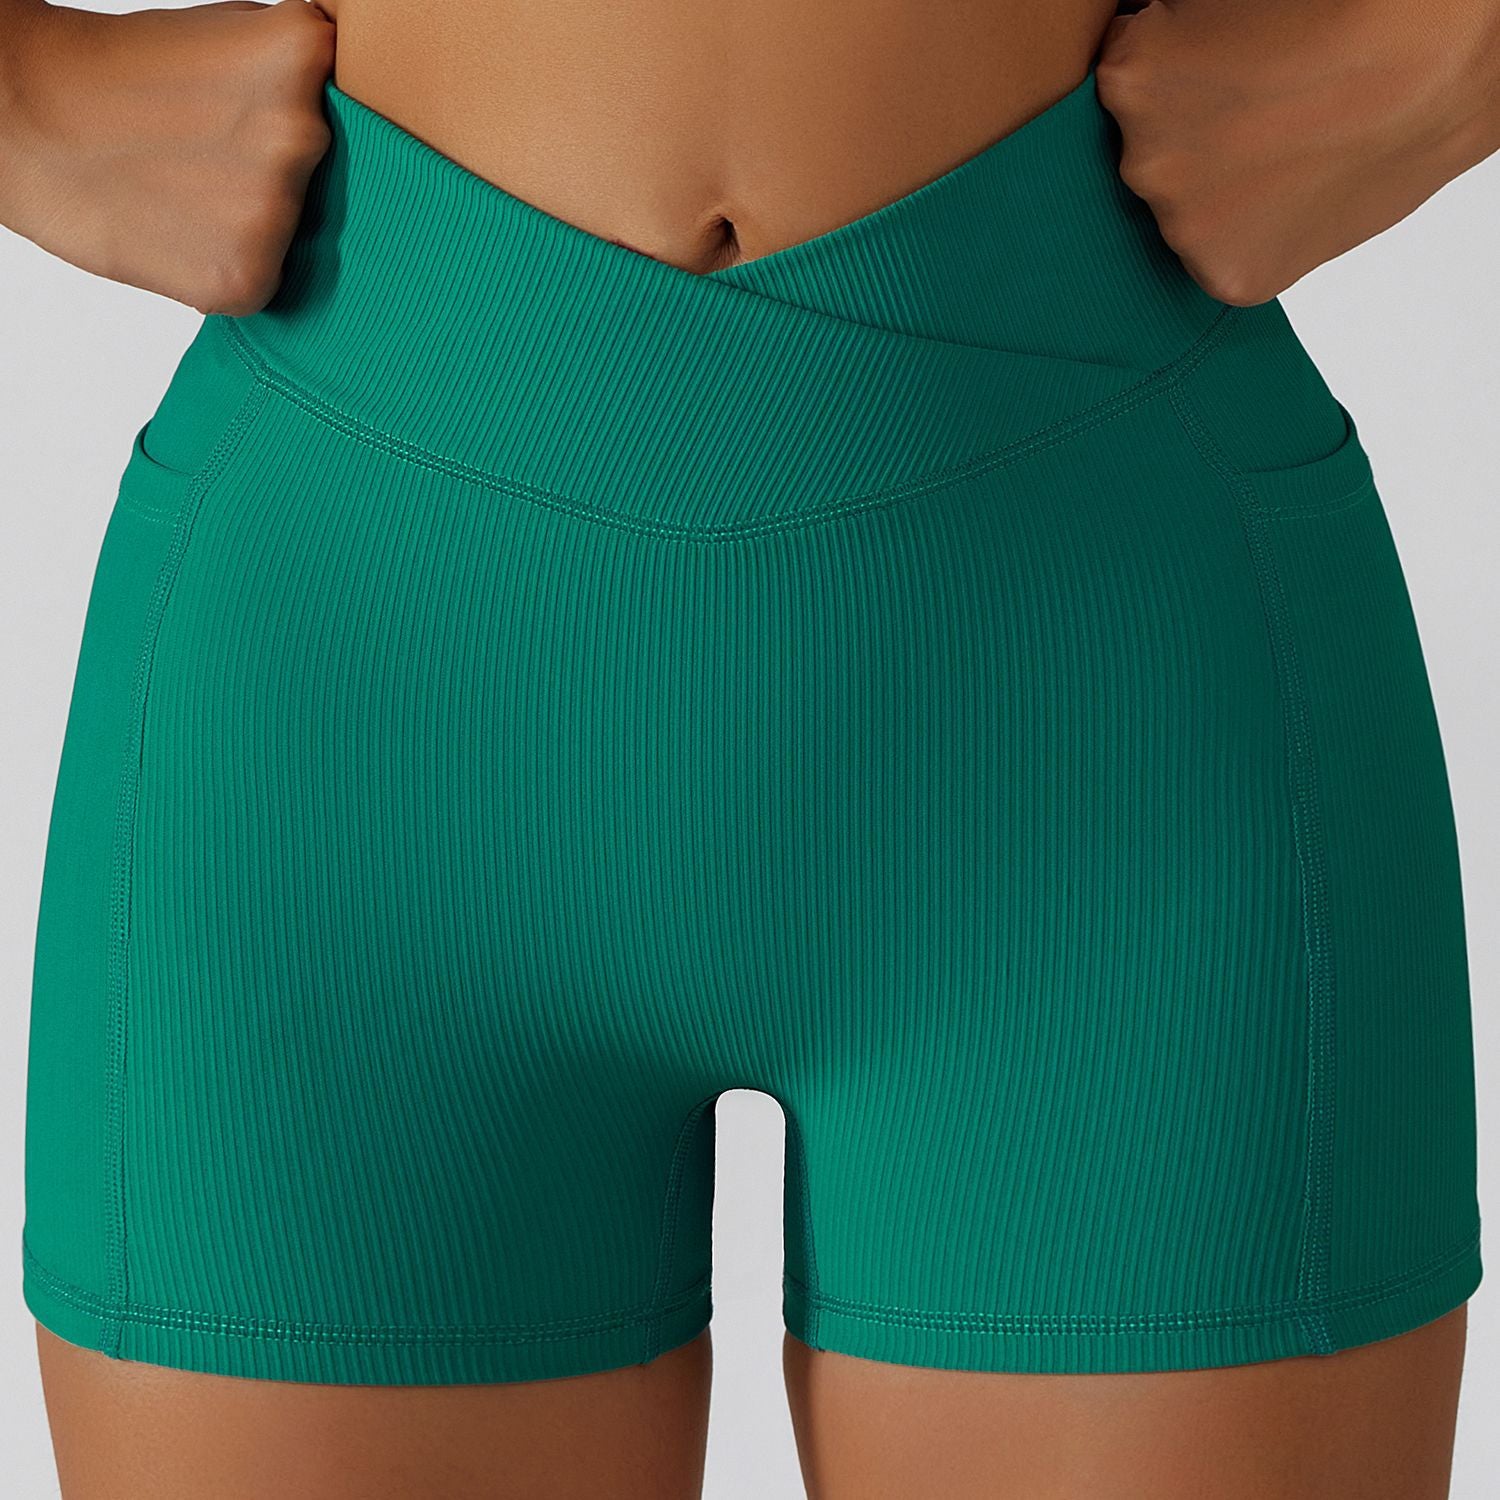 Women Gym Crop Top Bra Shorts shorts 1pcs 1